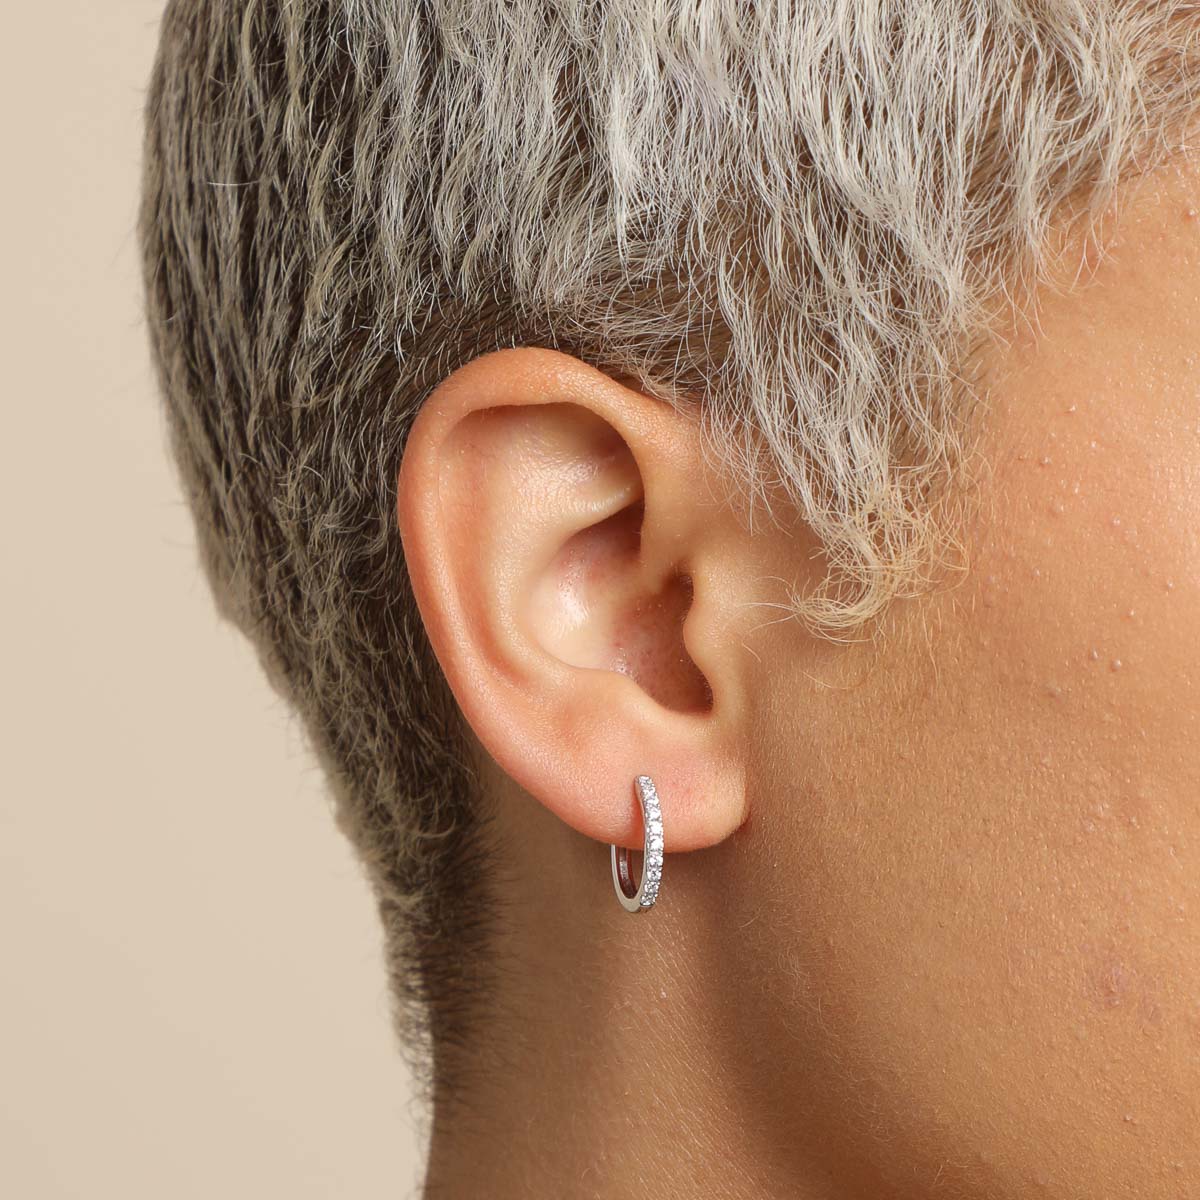 Silver Earrings Designs starting @ Rs. 510 -Shaya by CaratLane